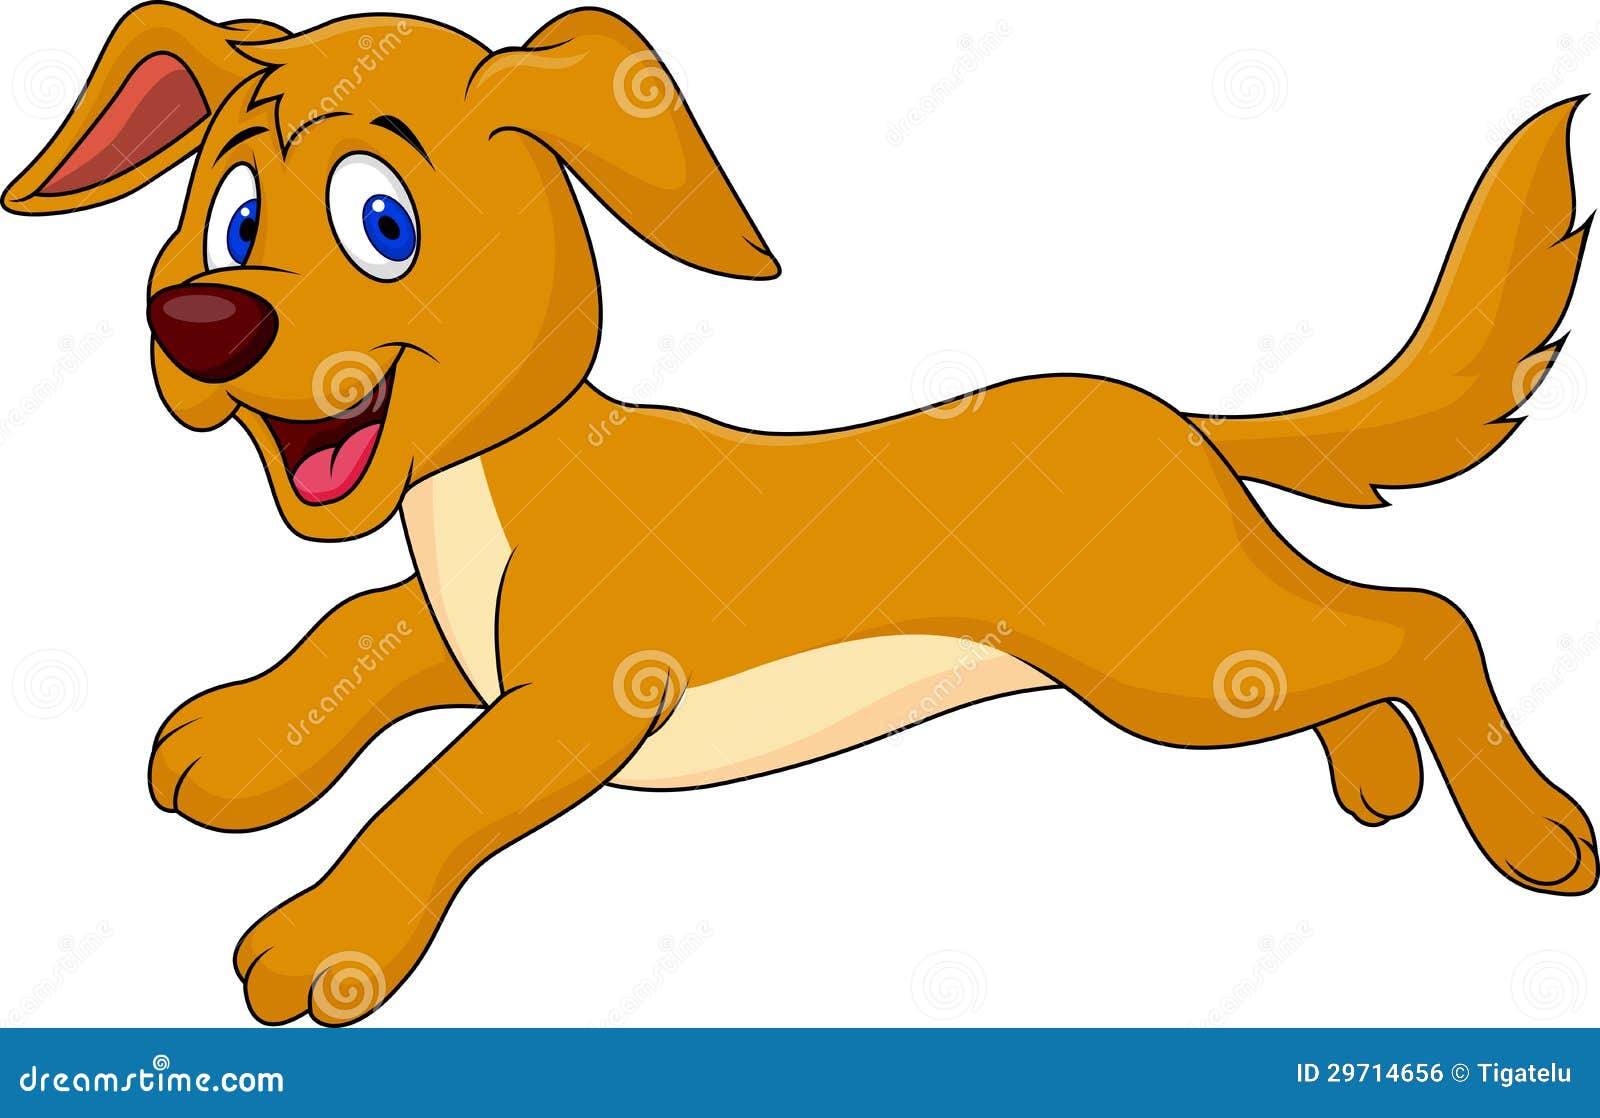 Cute dog cartoon running stock vector. Illustration of icon - 29714656